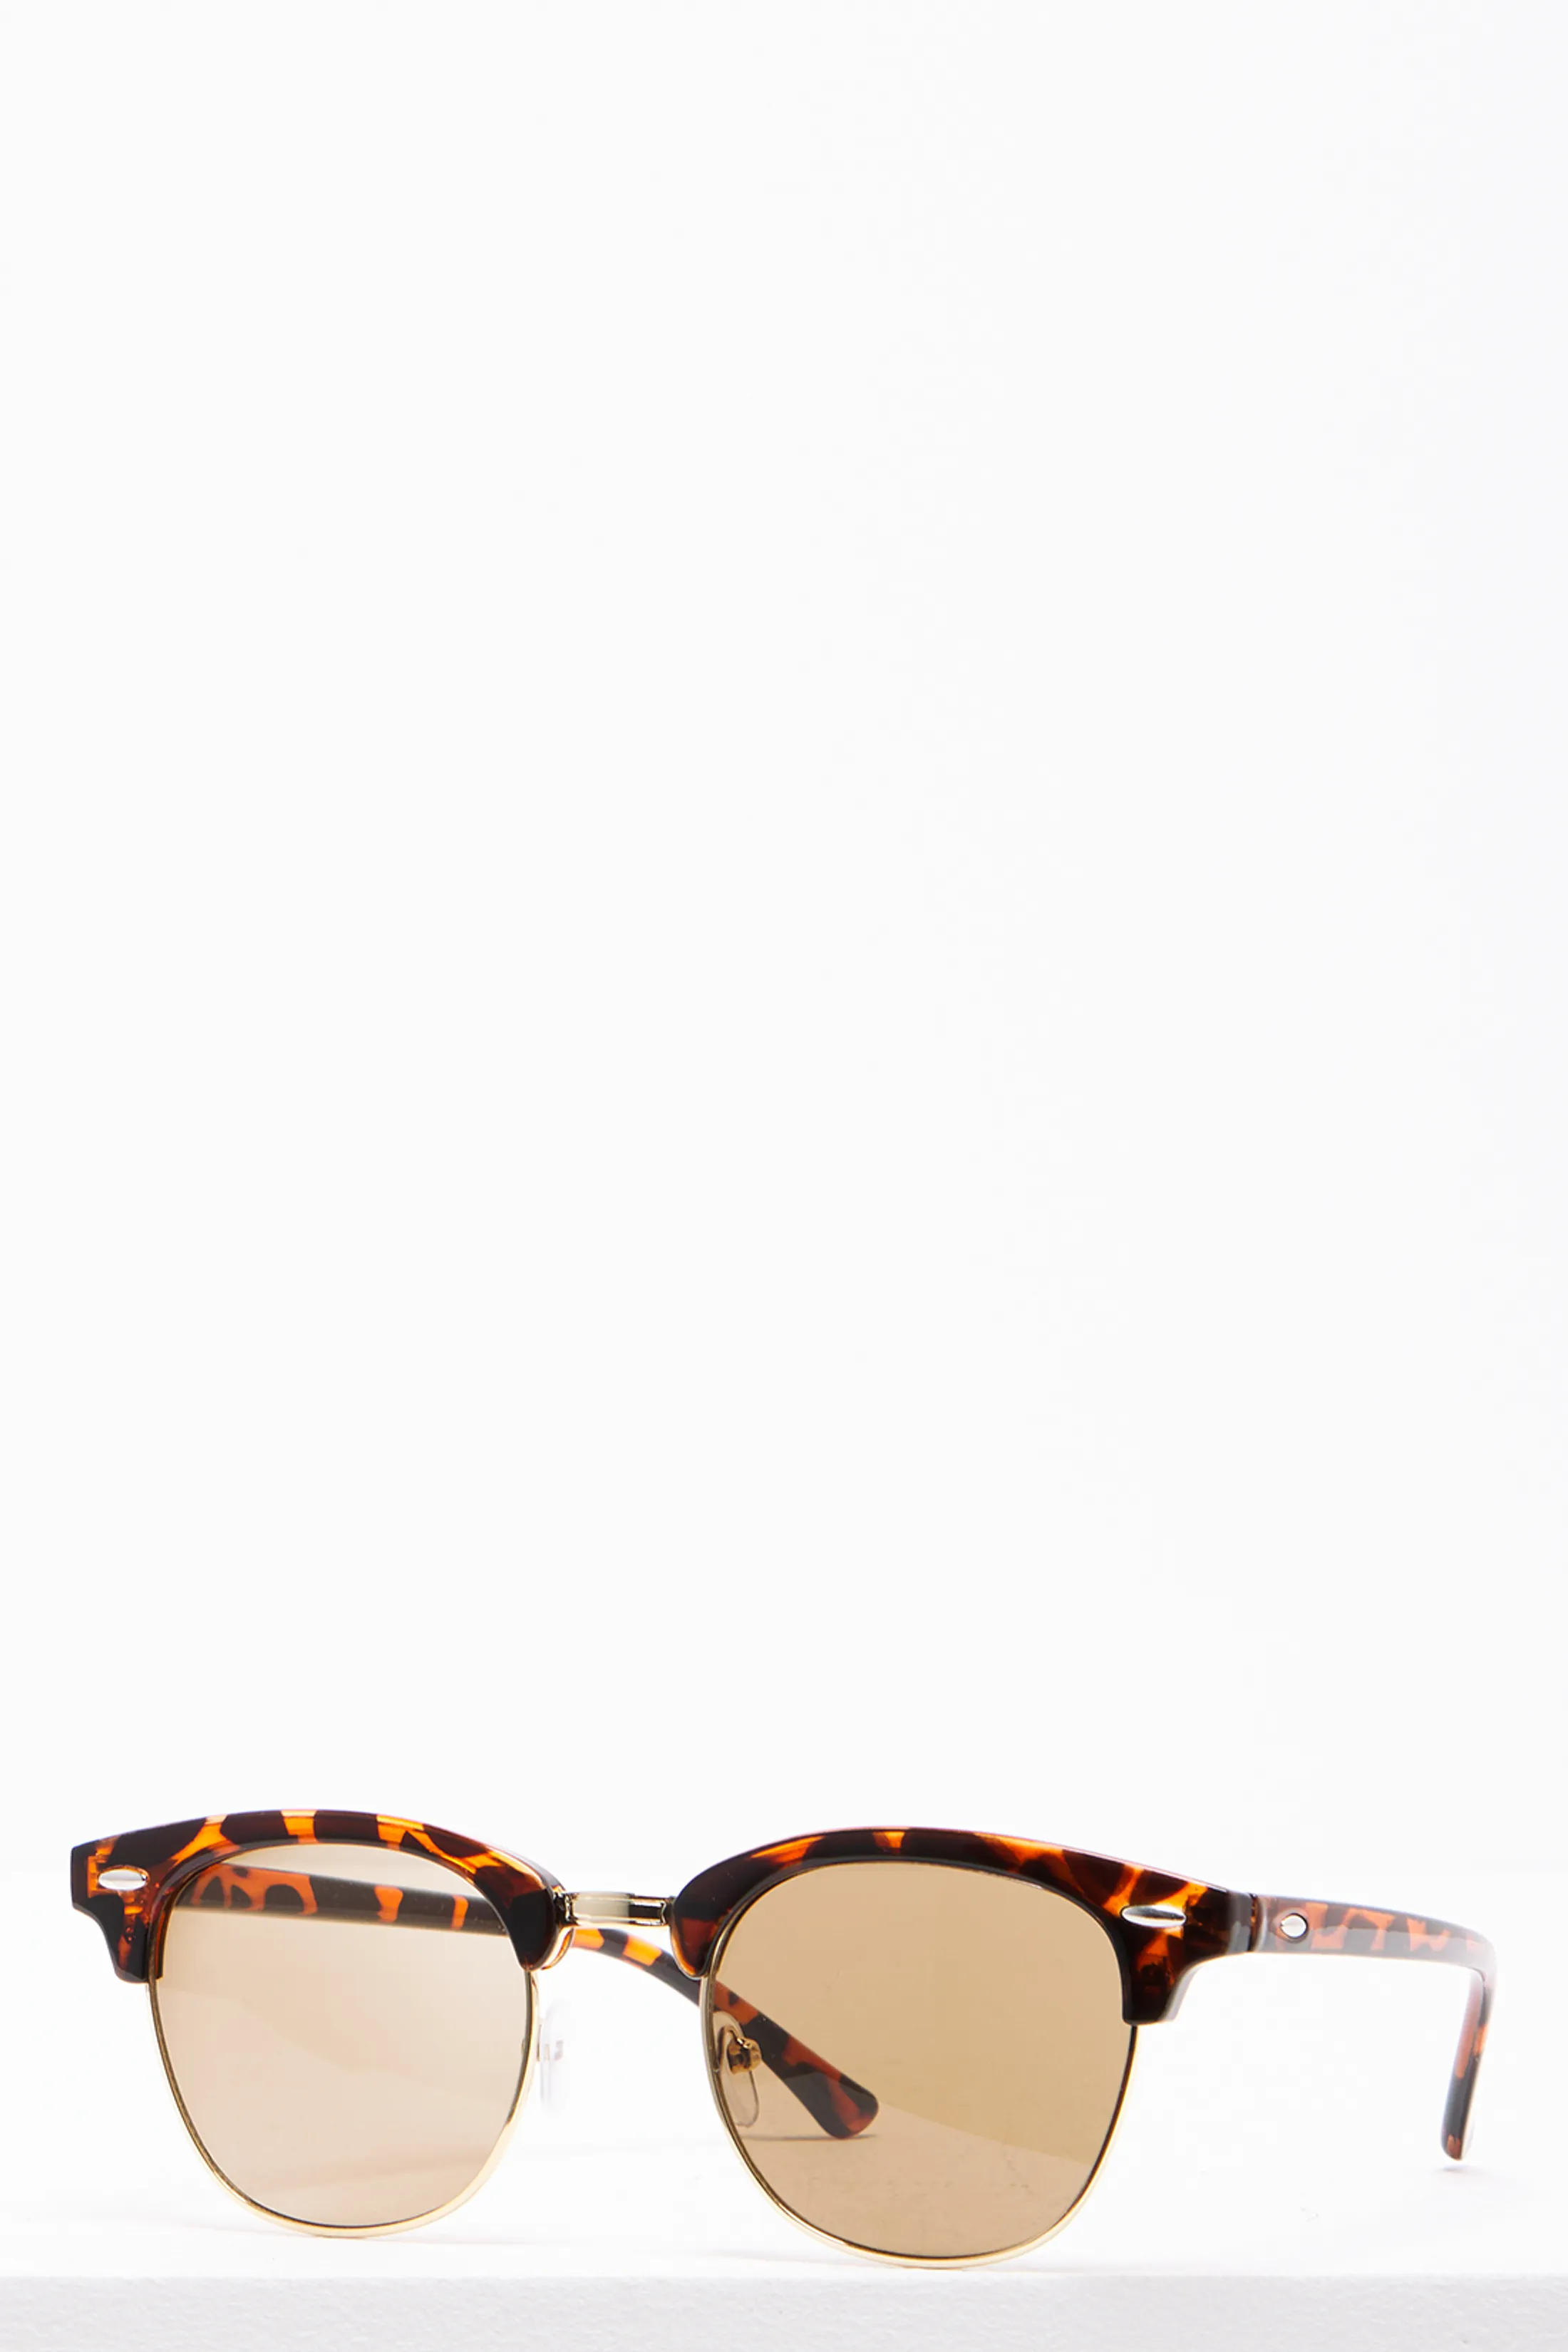 Tortoise shell sunglasses brown - TEEN BOYS Sunglasses